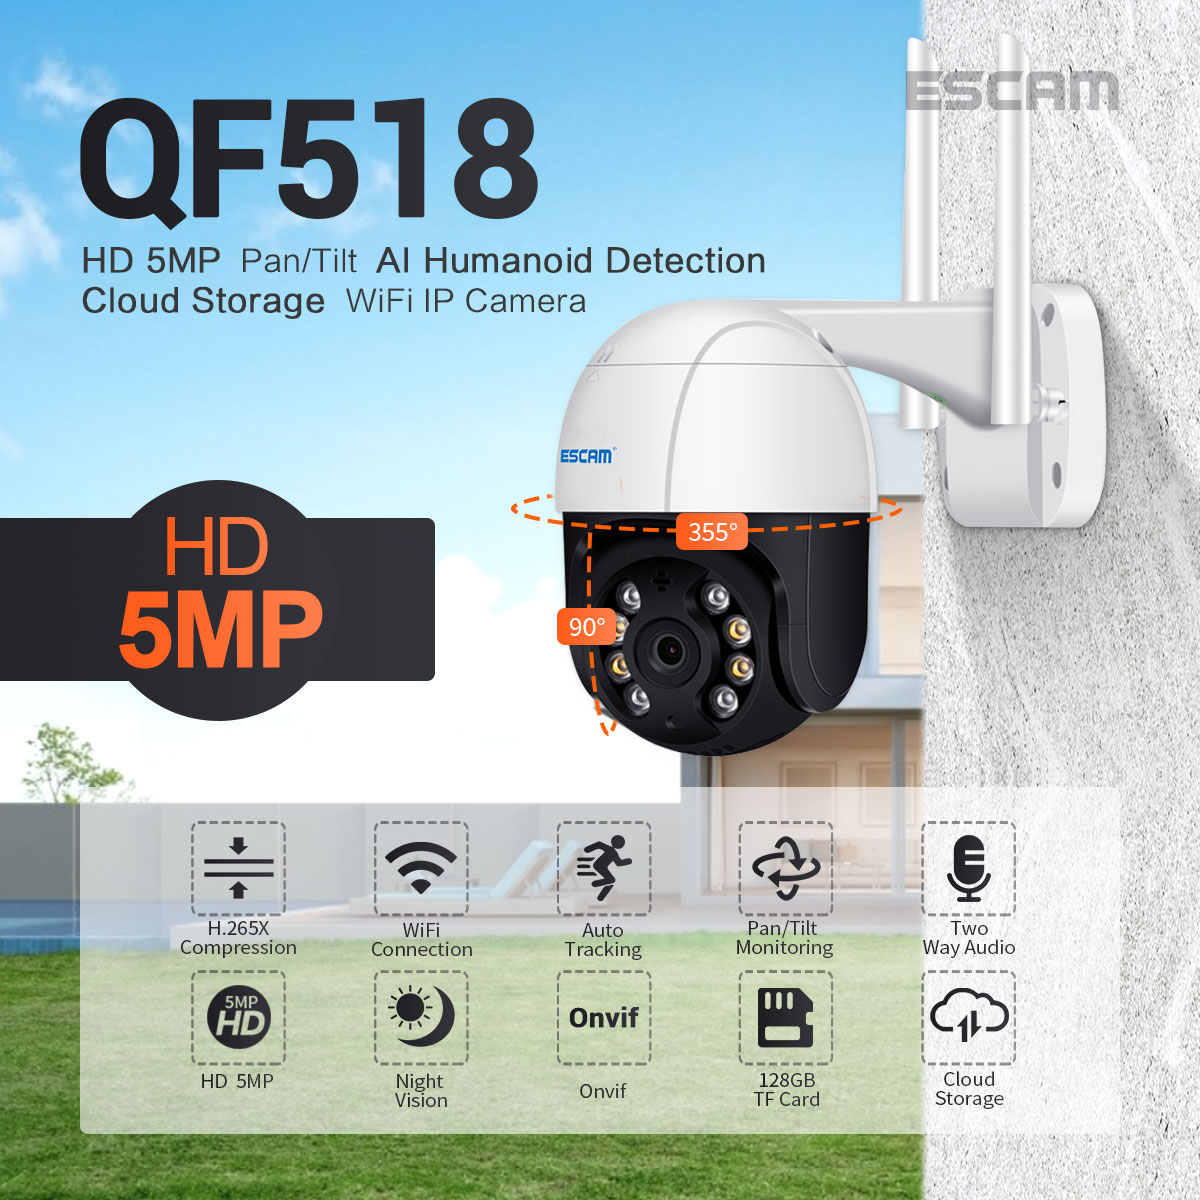 ESCAM-QF518-5MP-PanTilt-AI-Humanoid-Detection-Auto-Tracking-Cloud-Storage-Waterproof-WiFi-IP-Camera--1731086-2